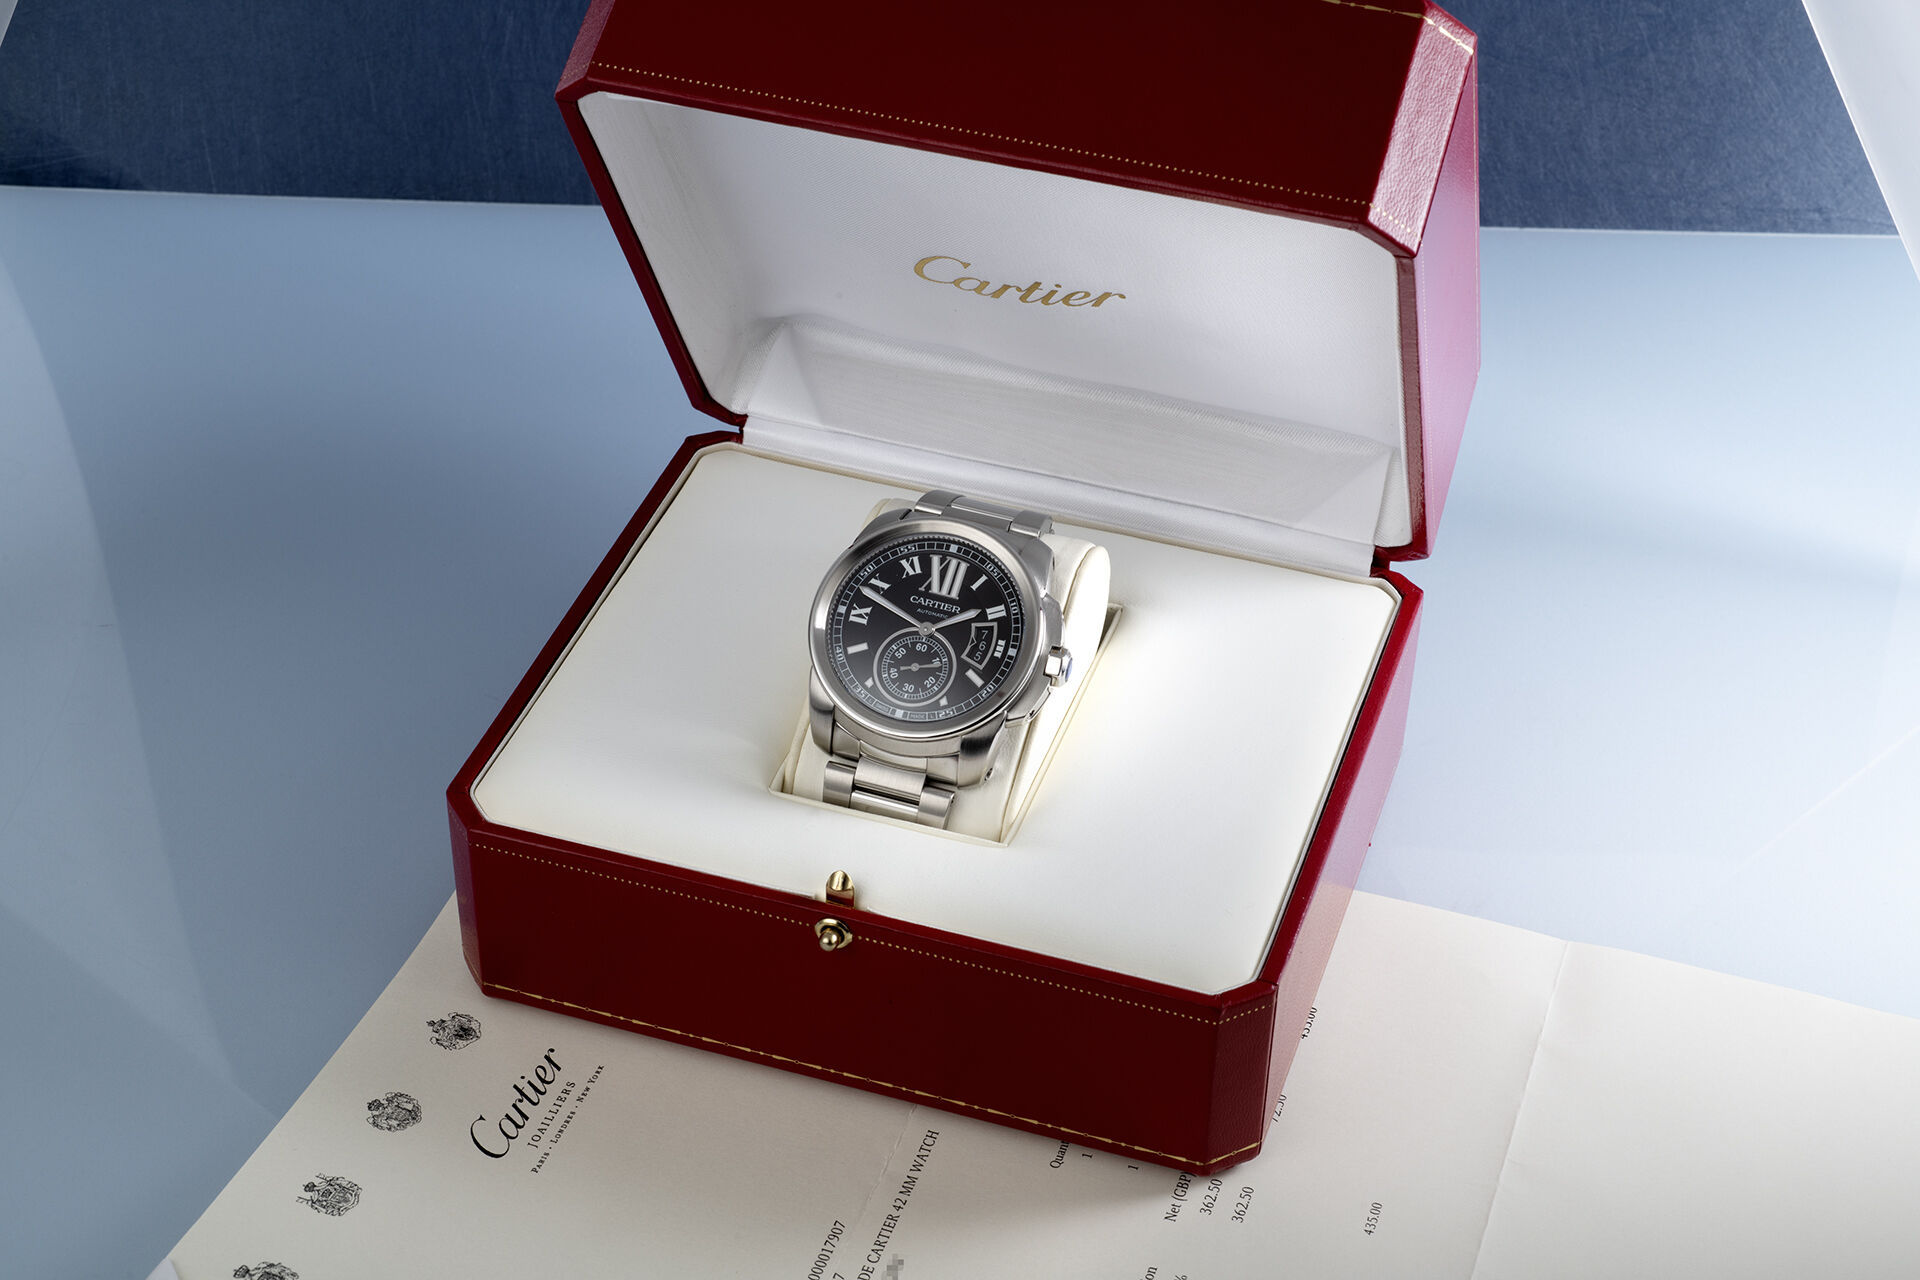 ref W7100016 | Just Serviced by Cartier | Cartier Calibre de Cartier